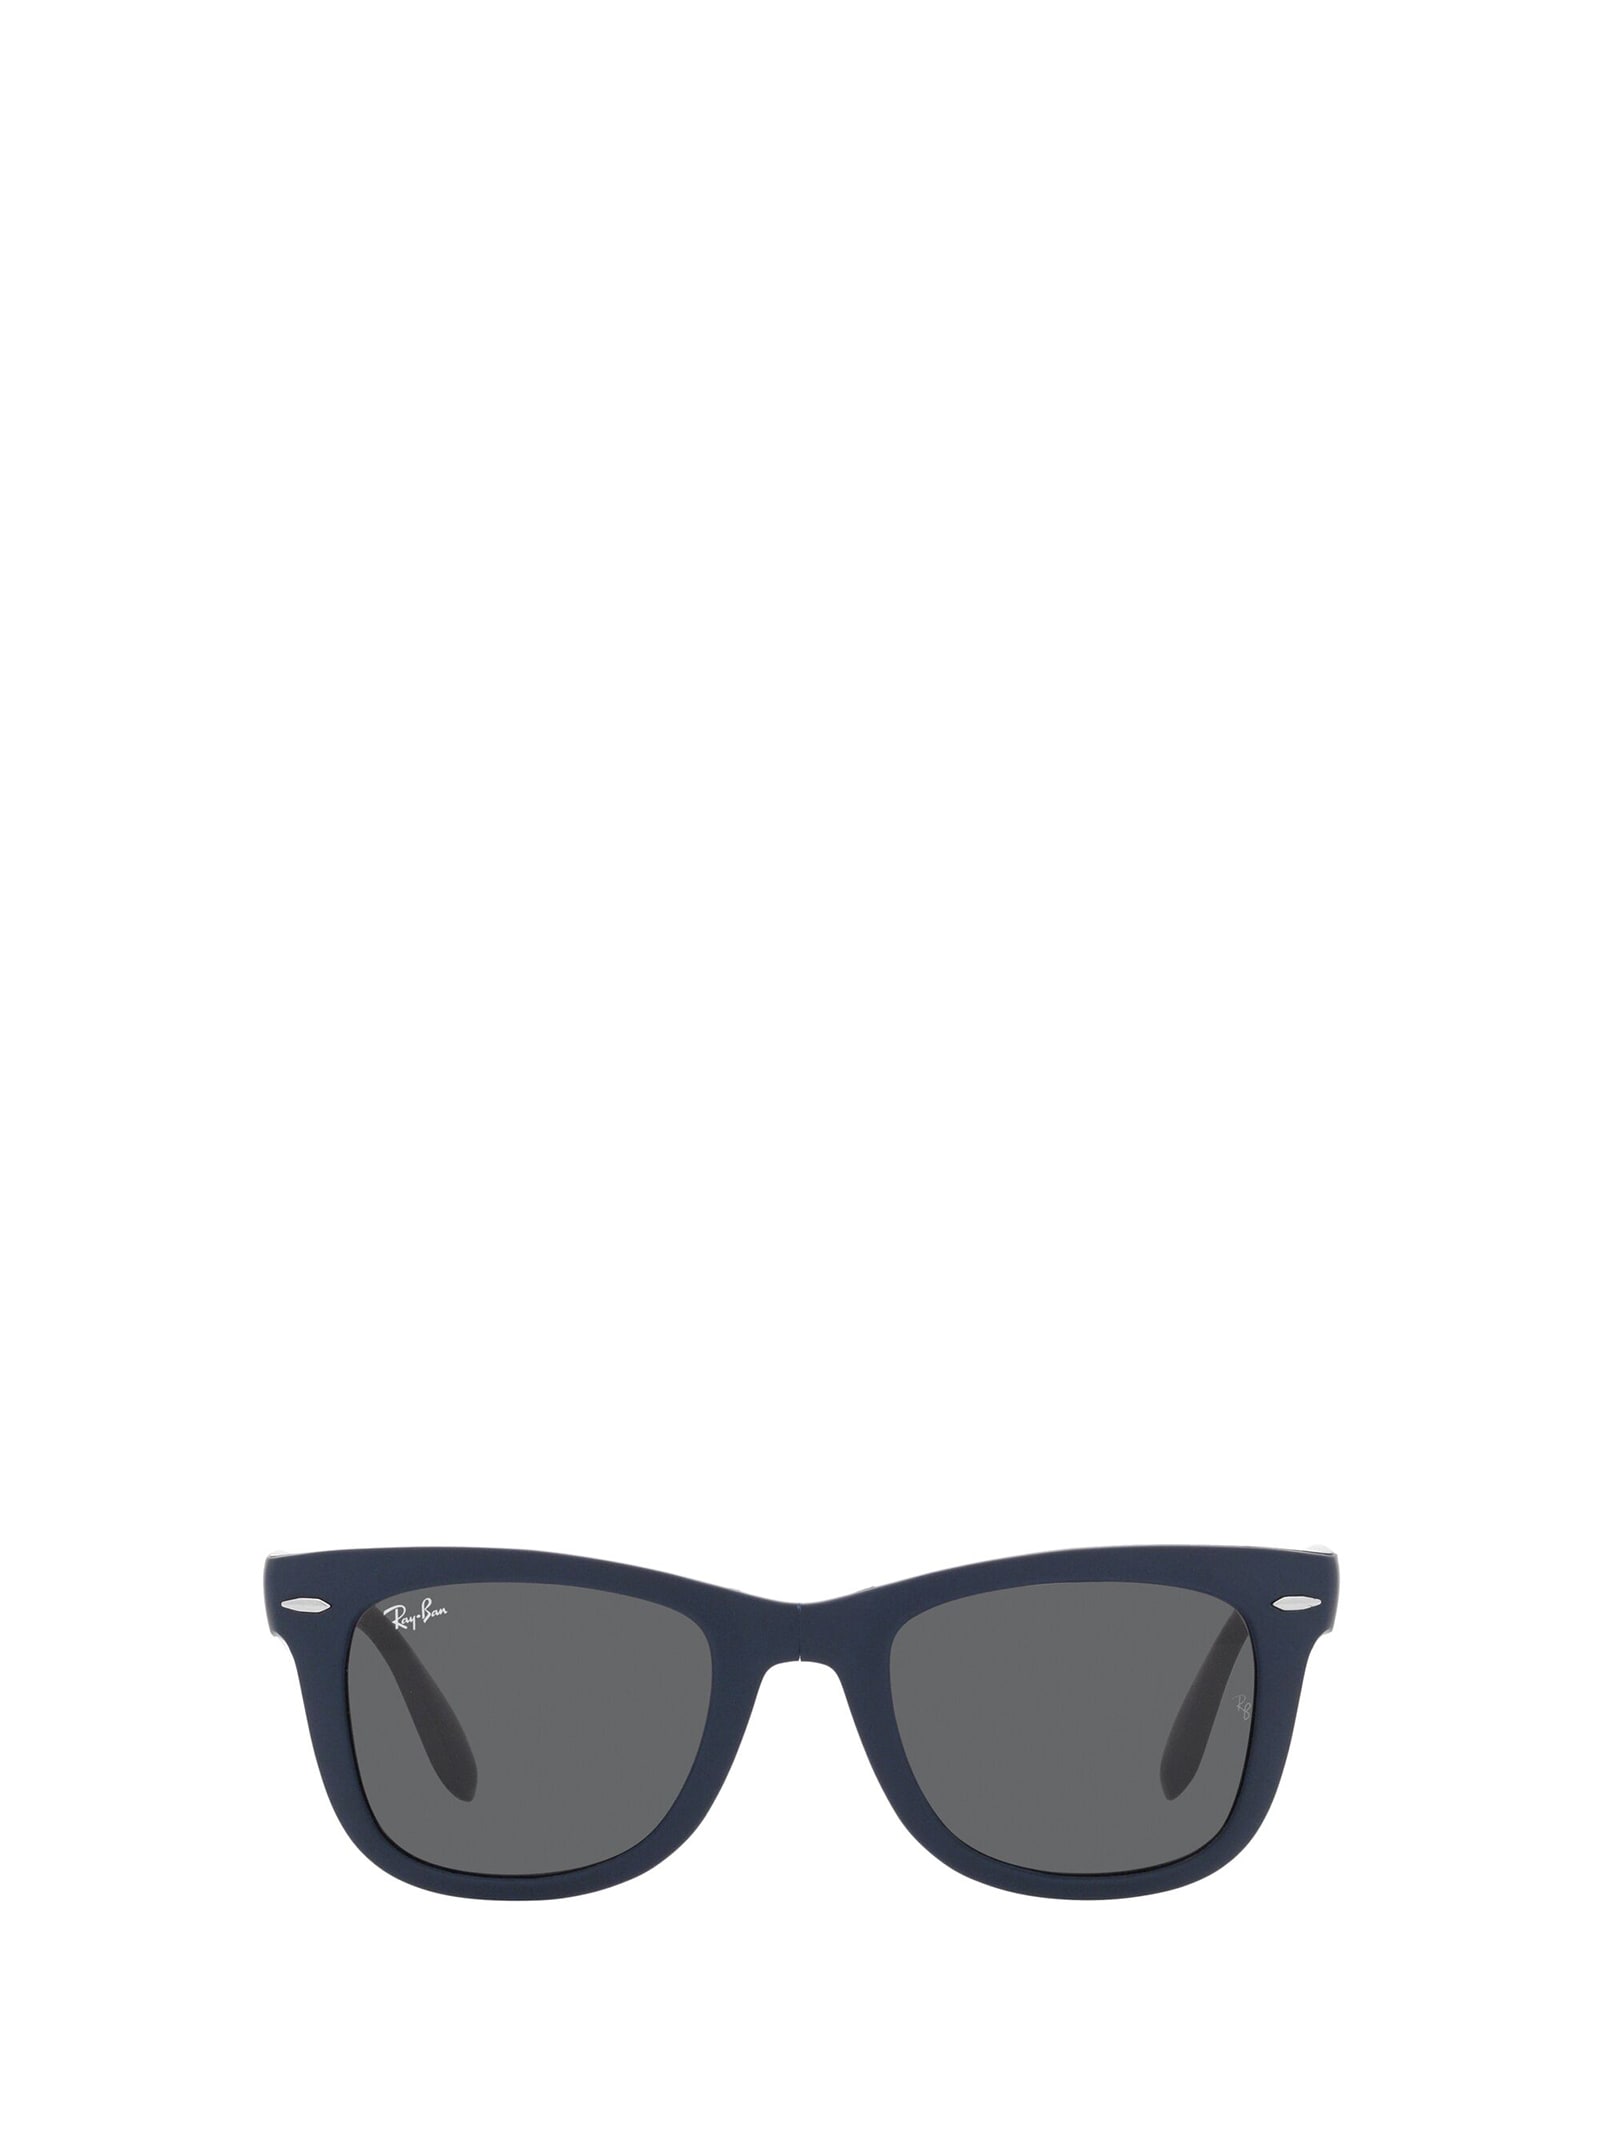 Ray-Ban Rb4105 Blue Sunglasses